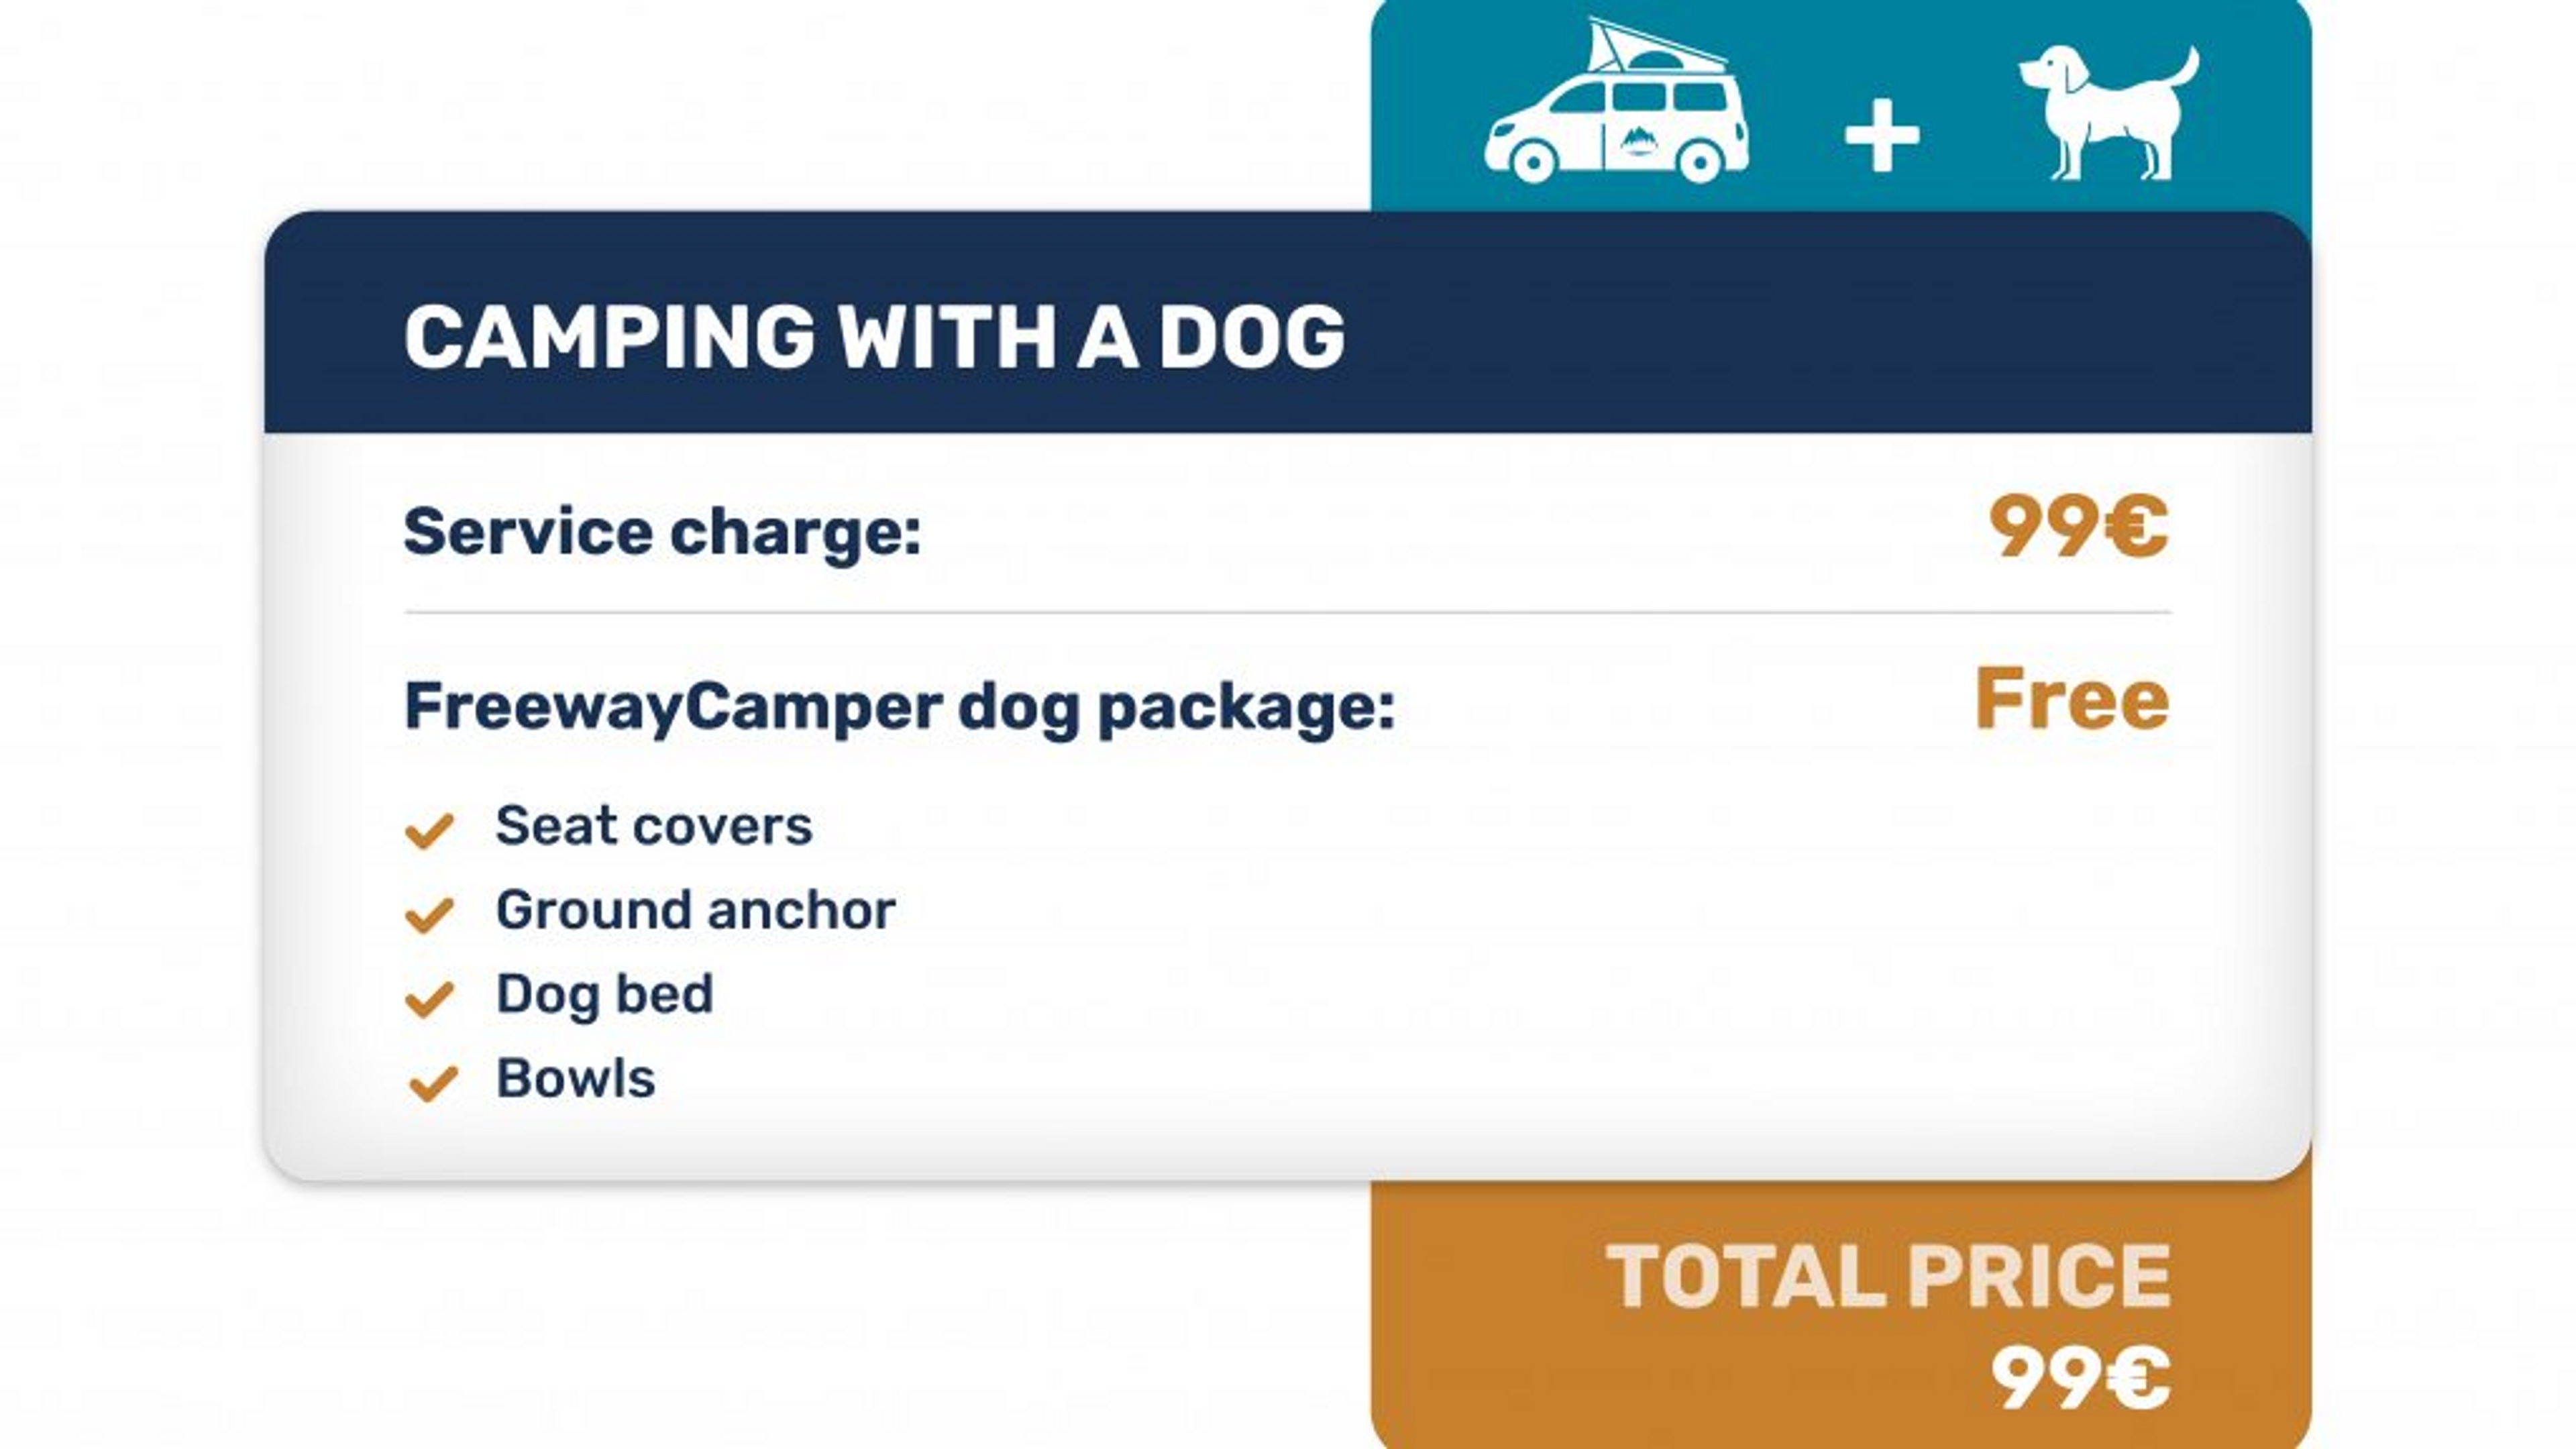 FreewayCamper dog package - products